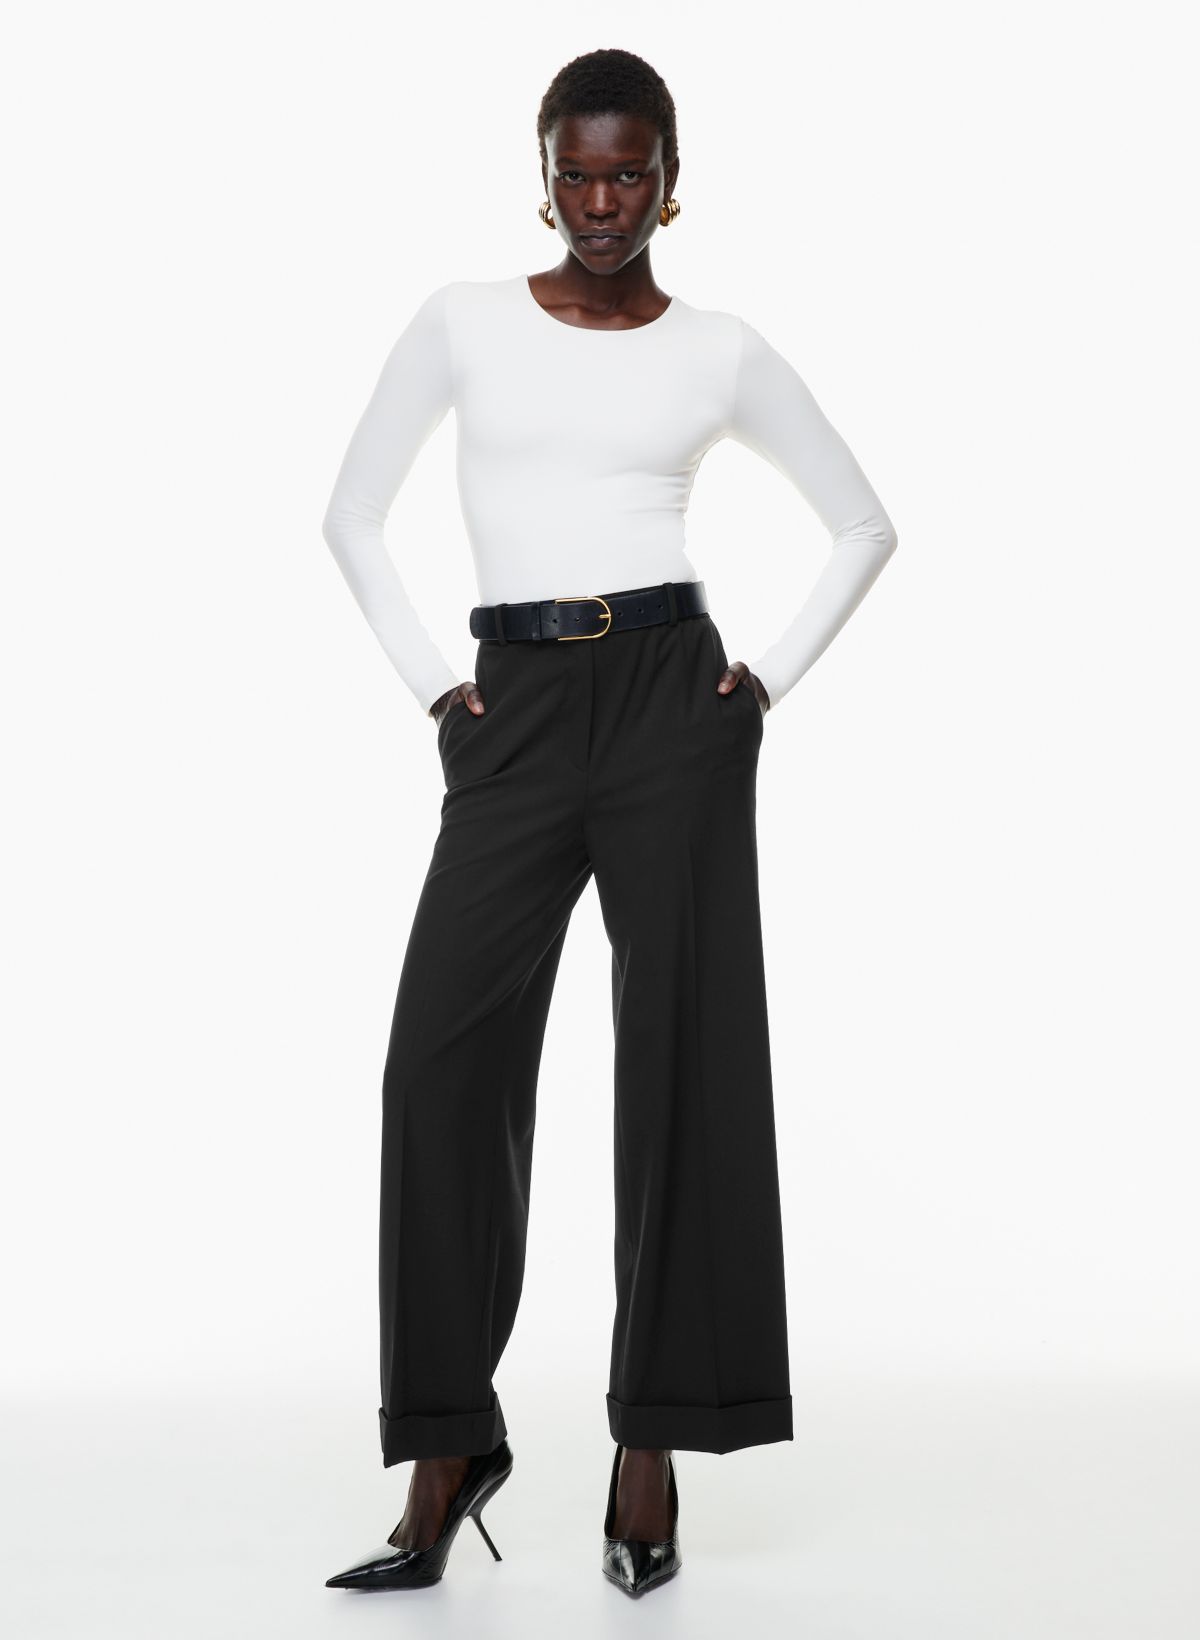 V Cross Waist Leggings for Women -Tummy Control Soft Workout Pant  (Black,Size:M)